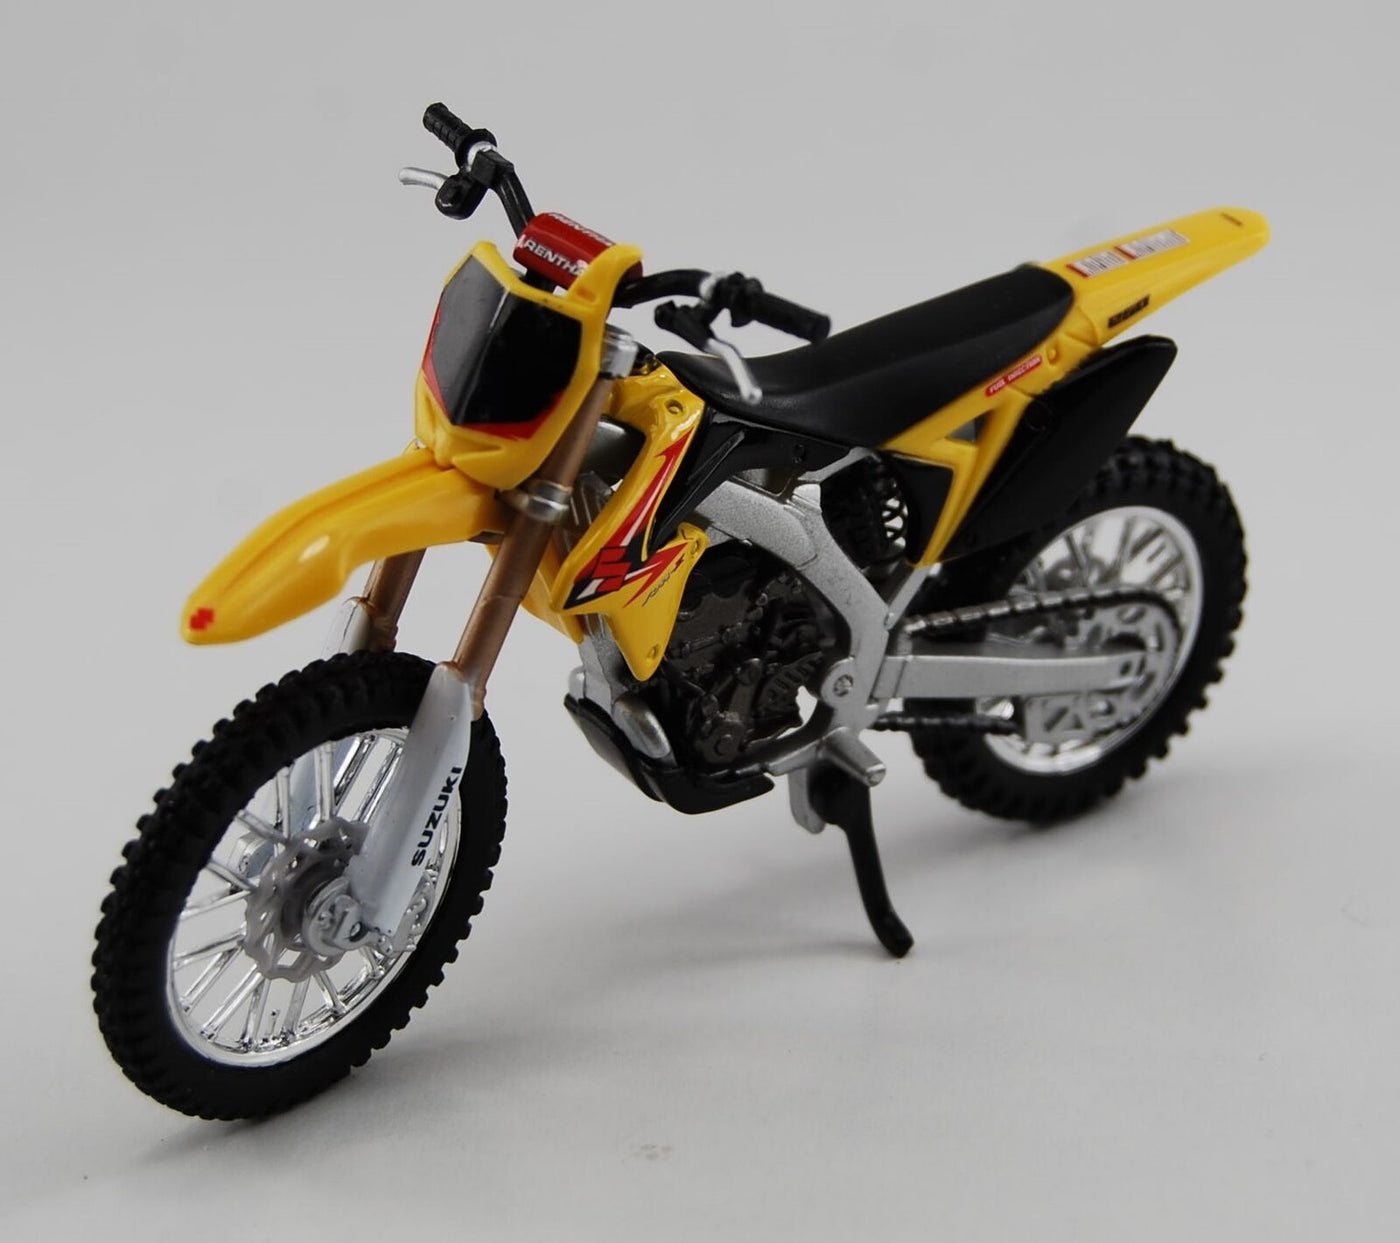 Burago Toy Models 1:18 Suzuki RMZ 450